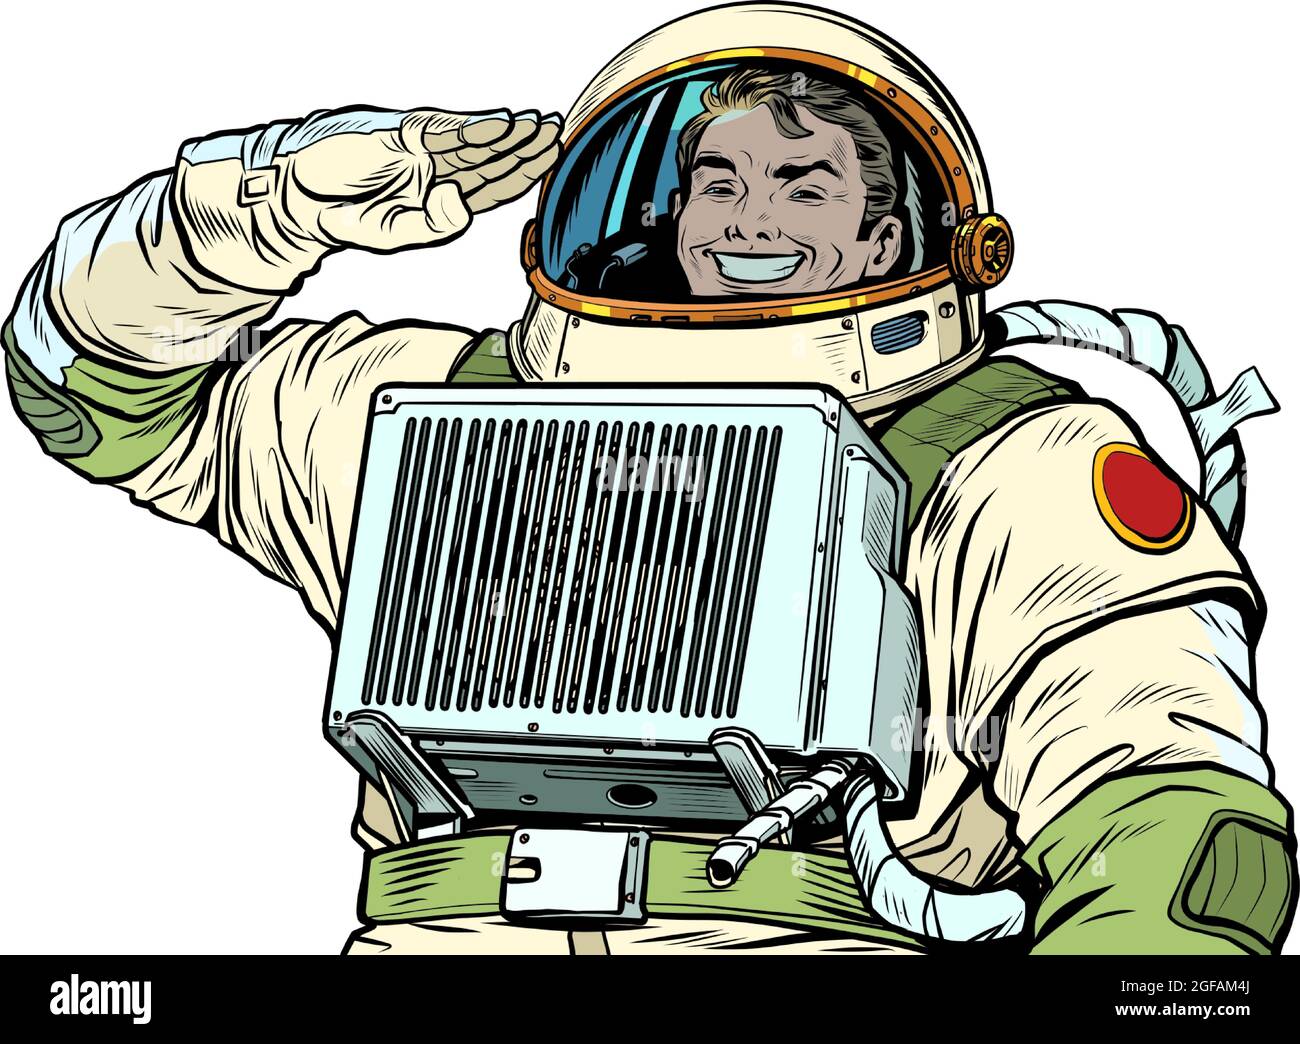 The joyful astronaut salutes, the cosmonaut captain. Soldier of the Universe Stock Vector